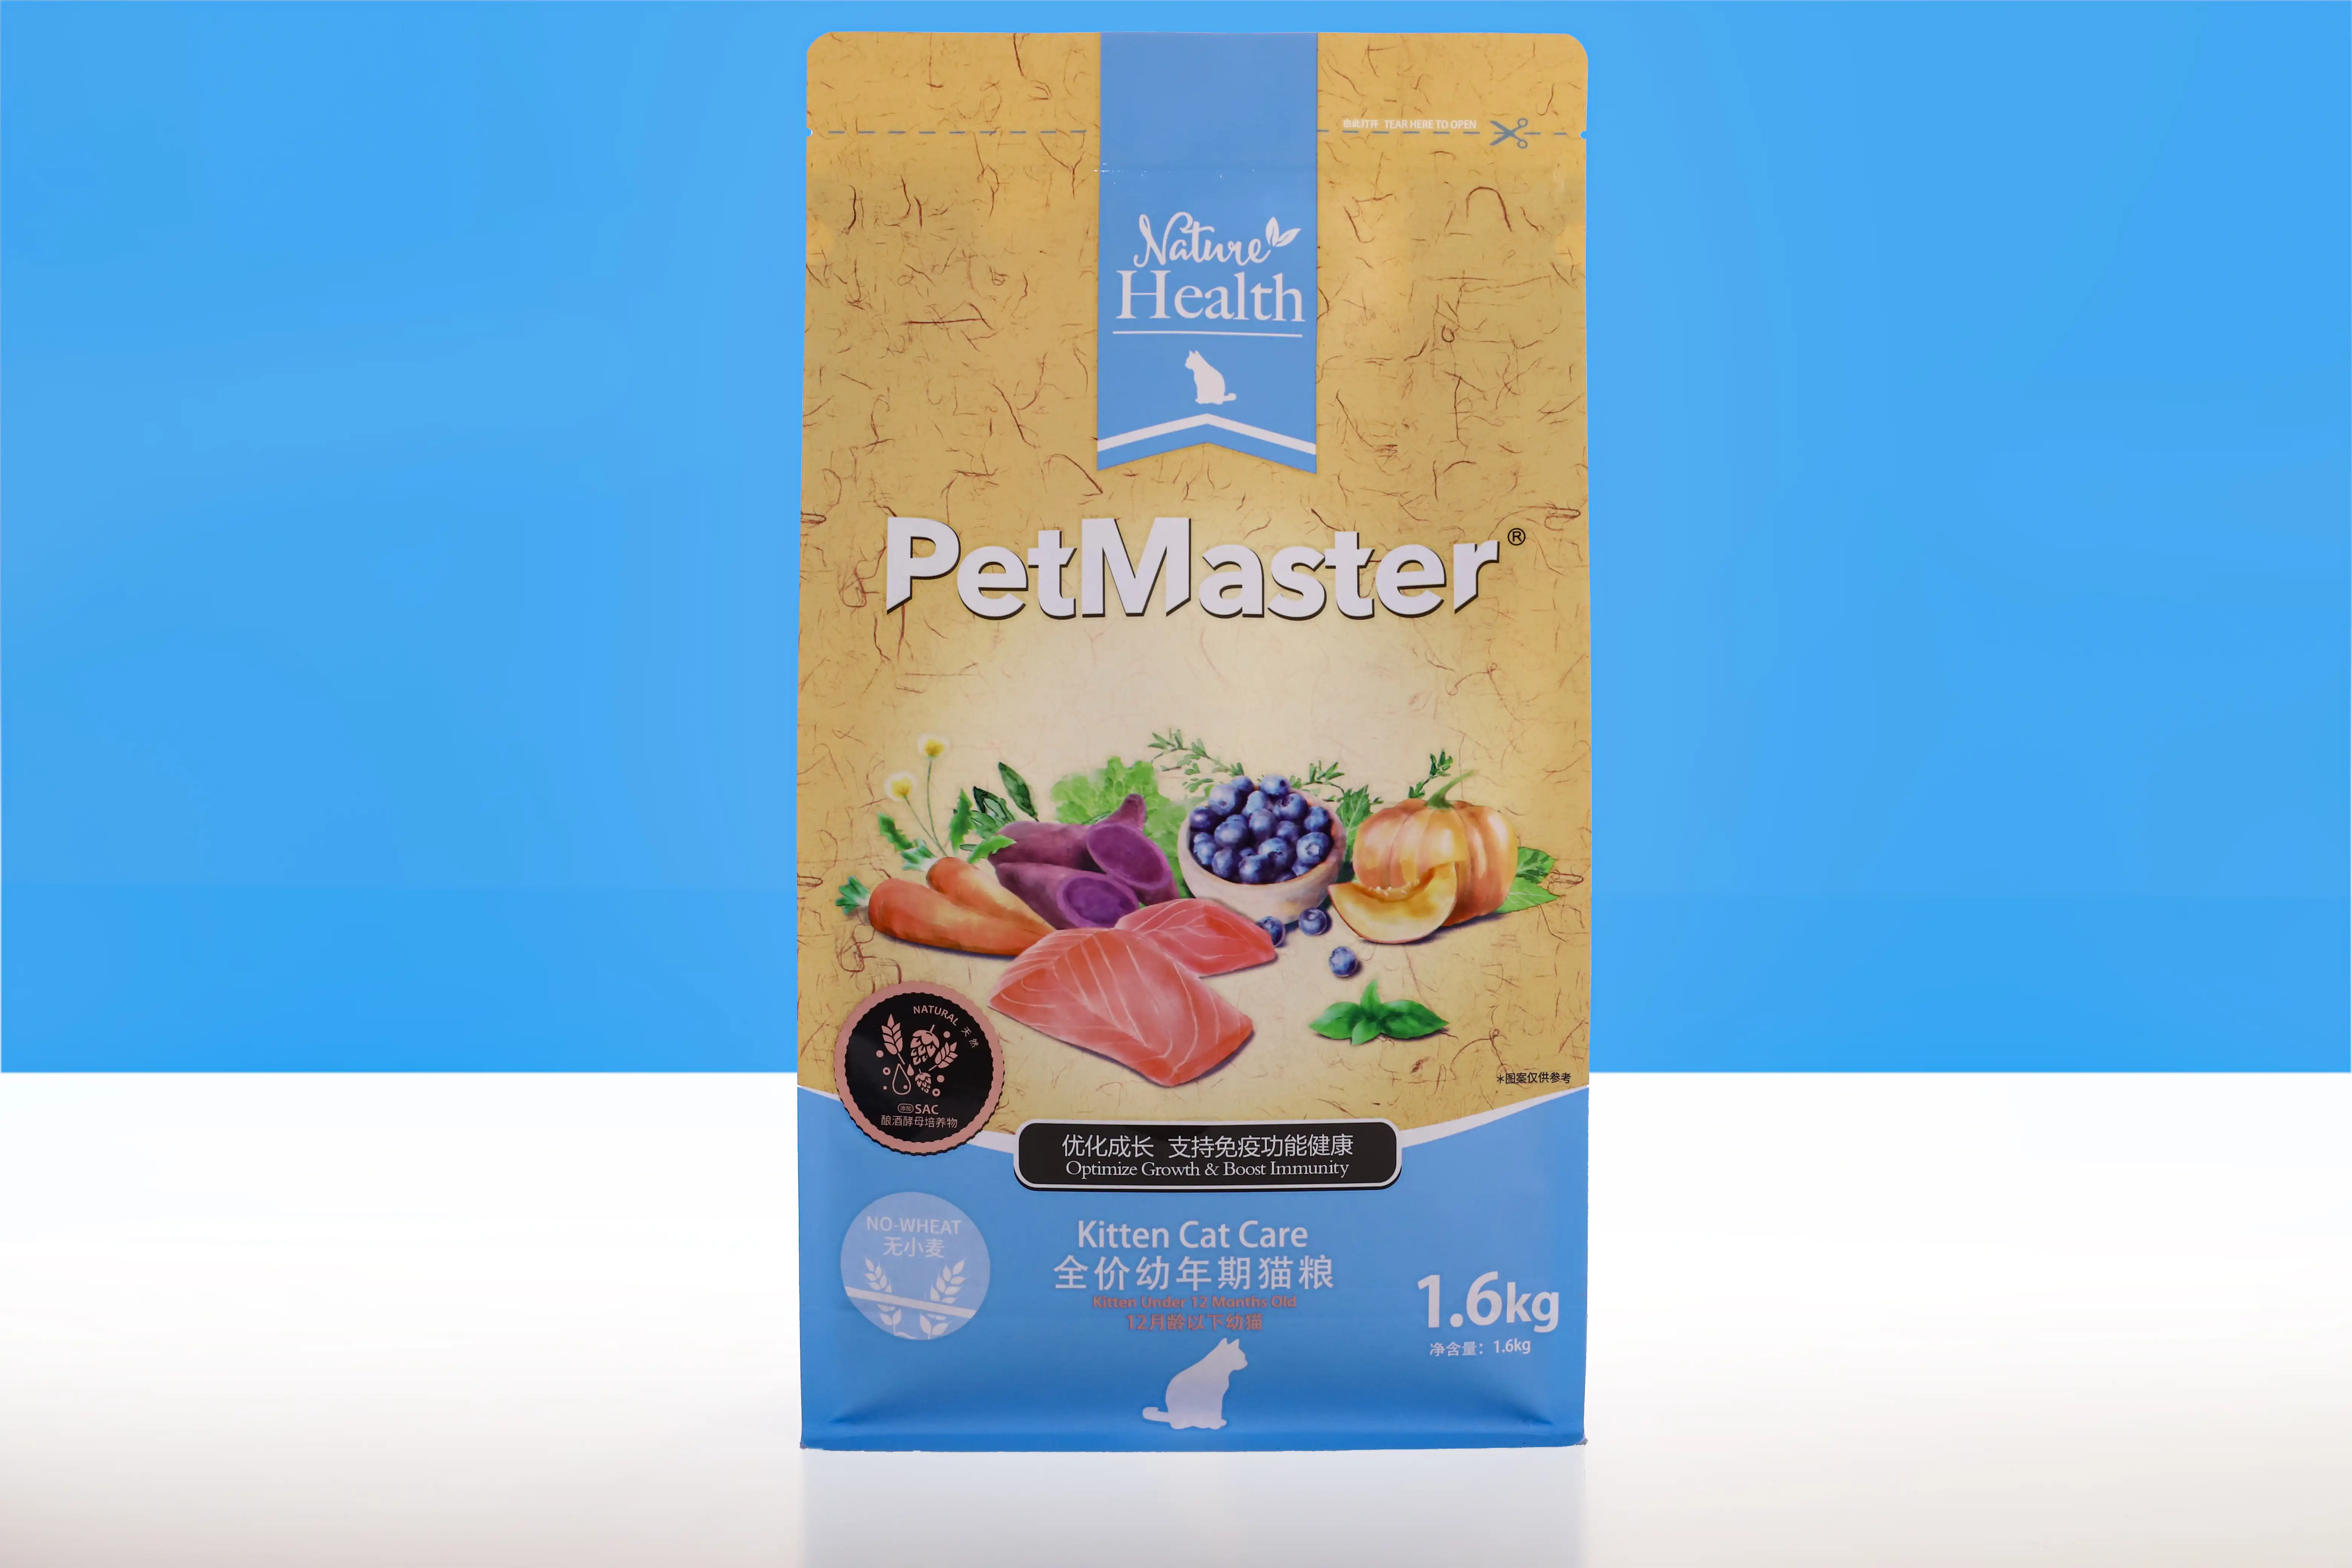 Pet's Health with Premium Pet Food Packaging